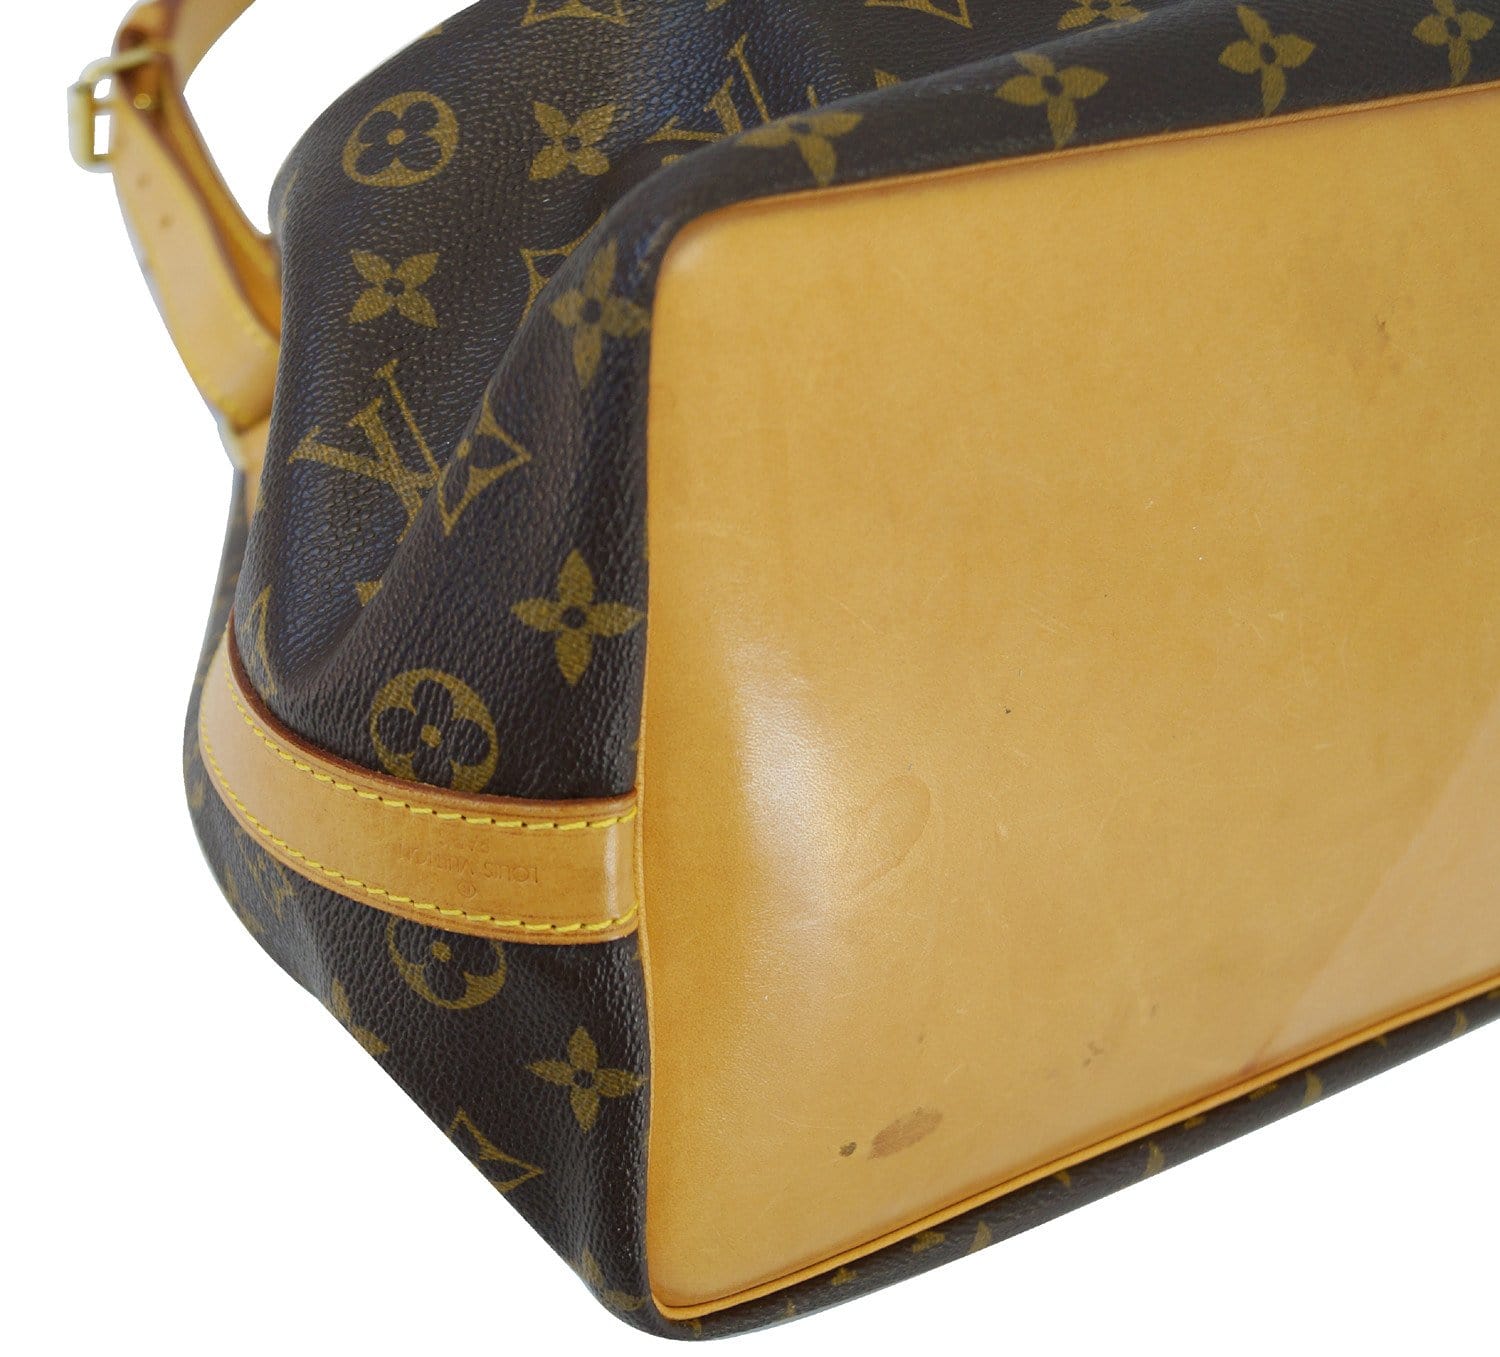 PreOrderAuthentic Louis Vuitton Monogram Petit Noe Shoulder Bag 862MI